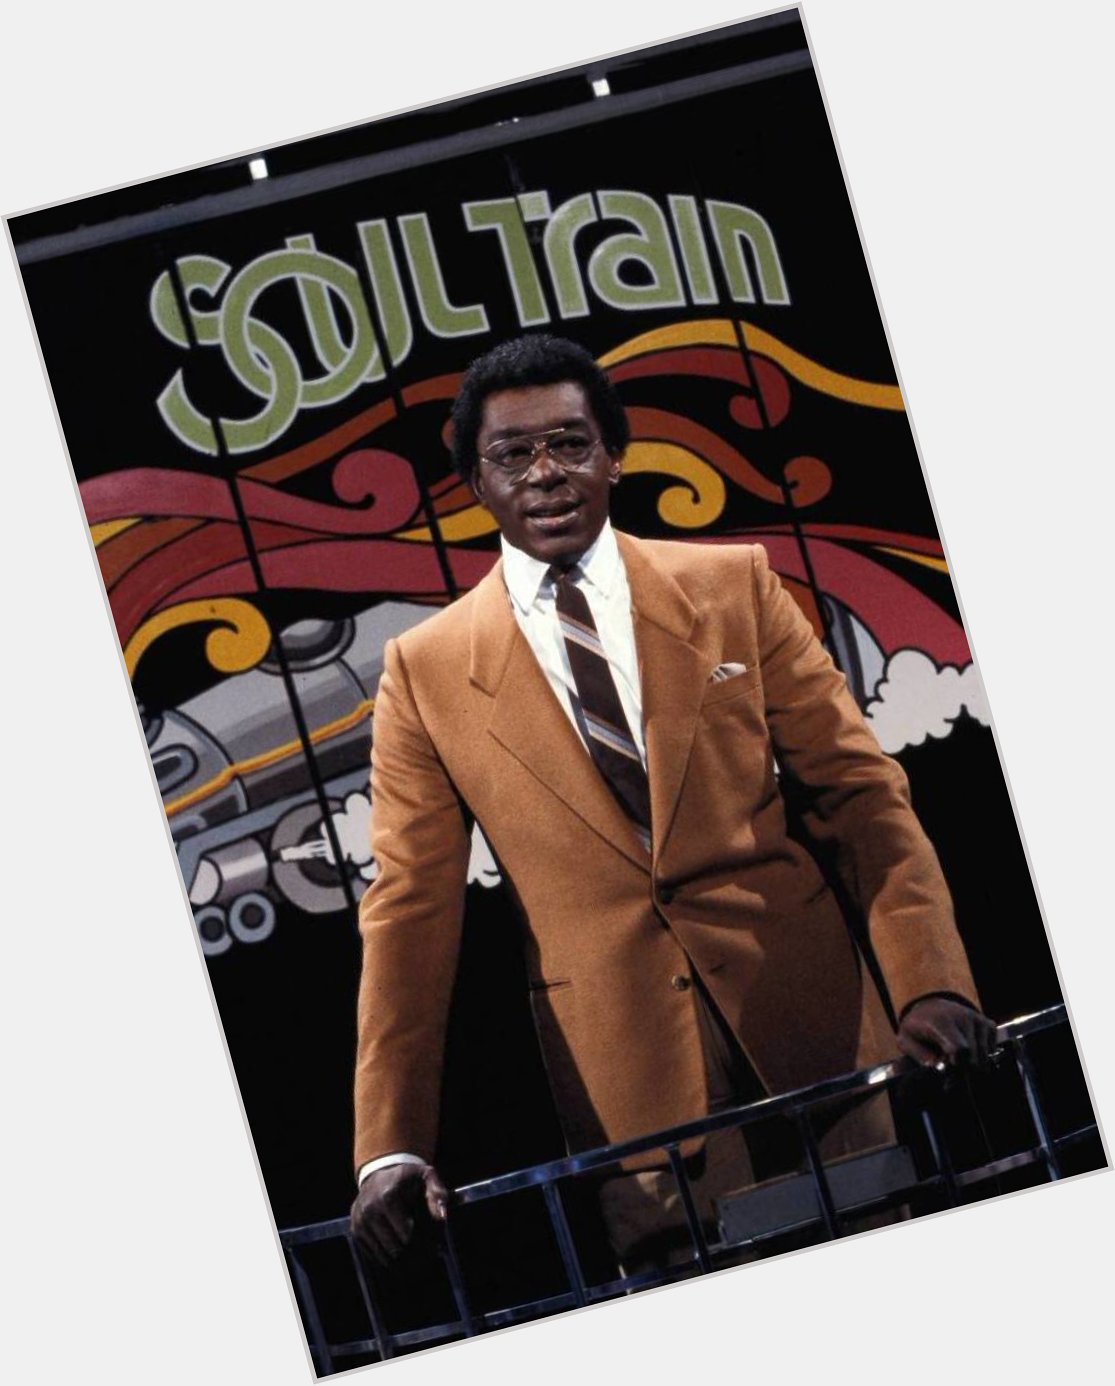 Happy birthday to legendary Soul Train host Don Cornelius RIP 